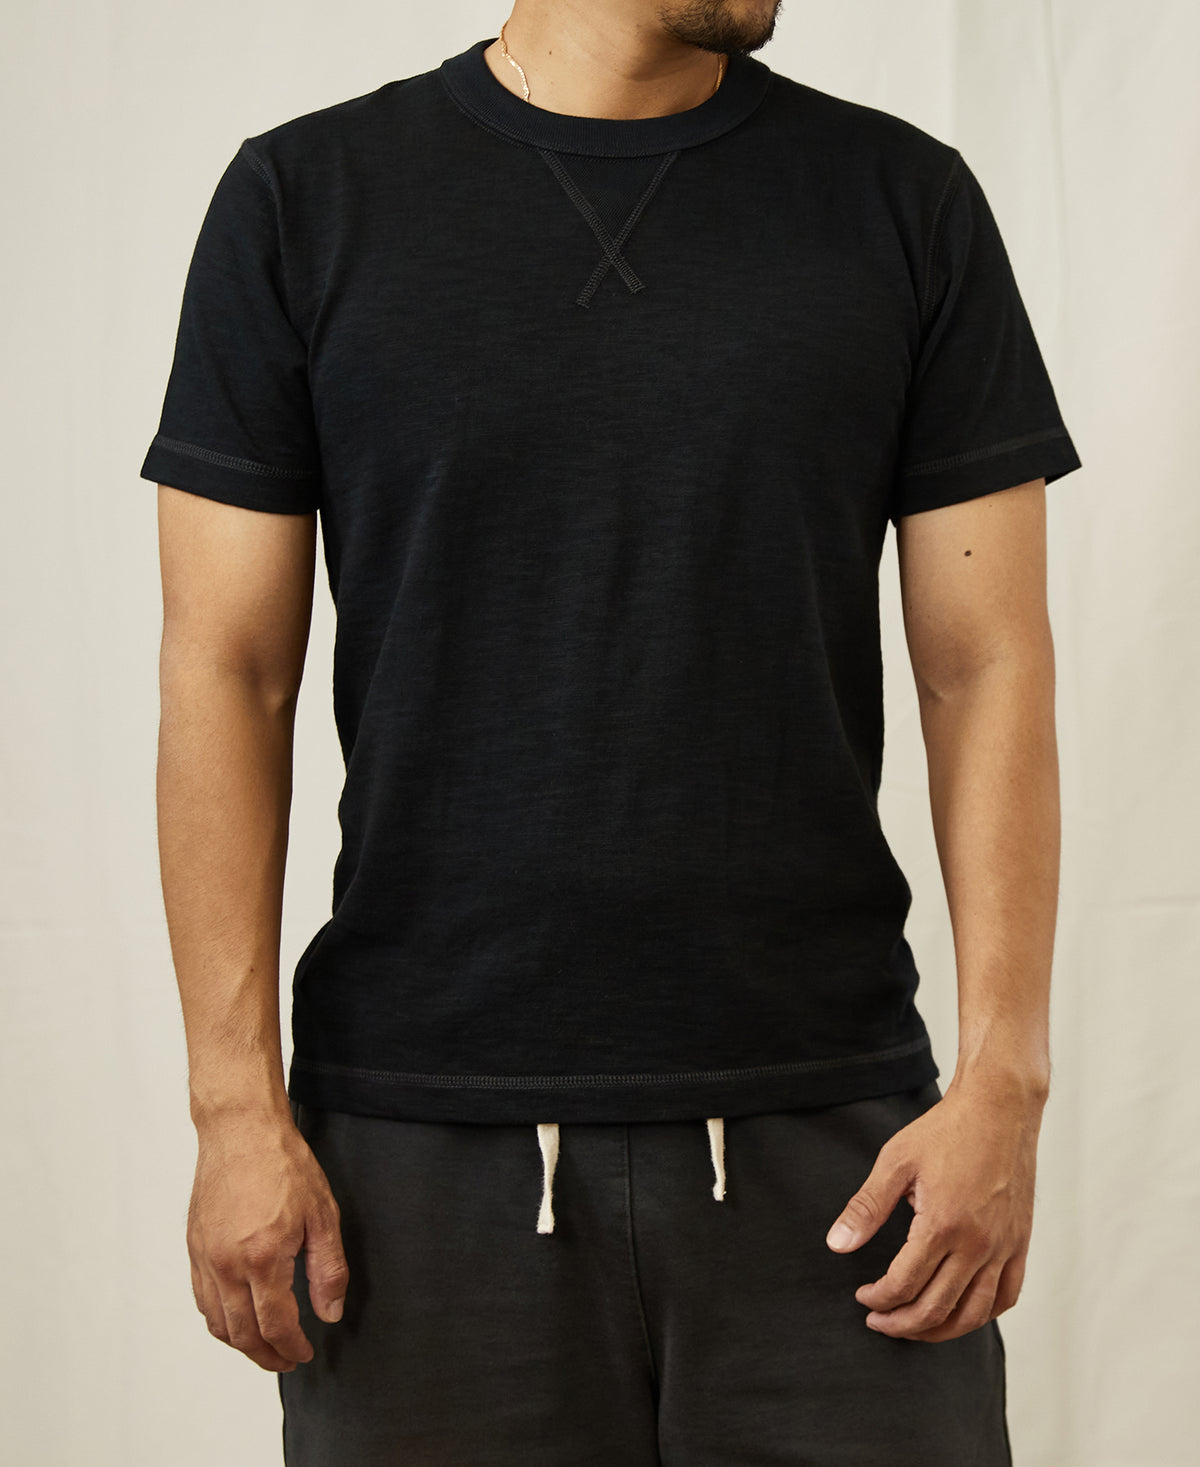 Heavyweight US Cotton Gusset Tubular T-Shirt - Black